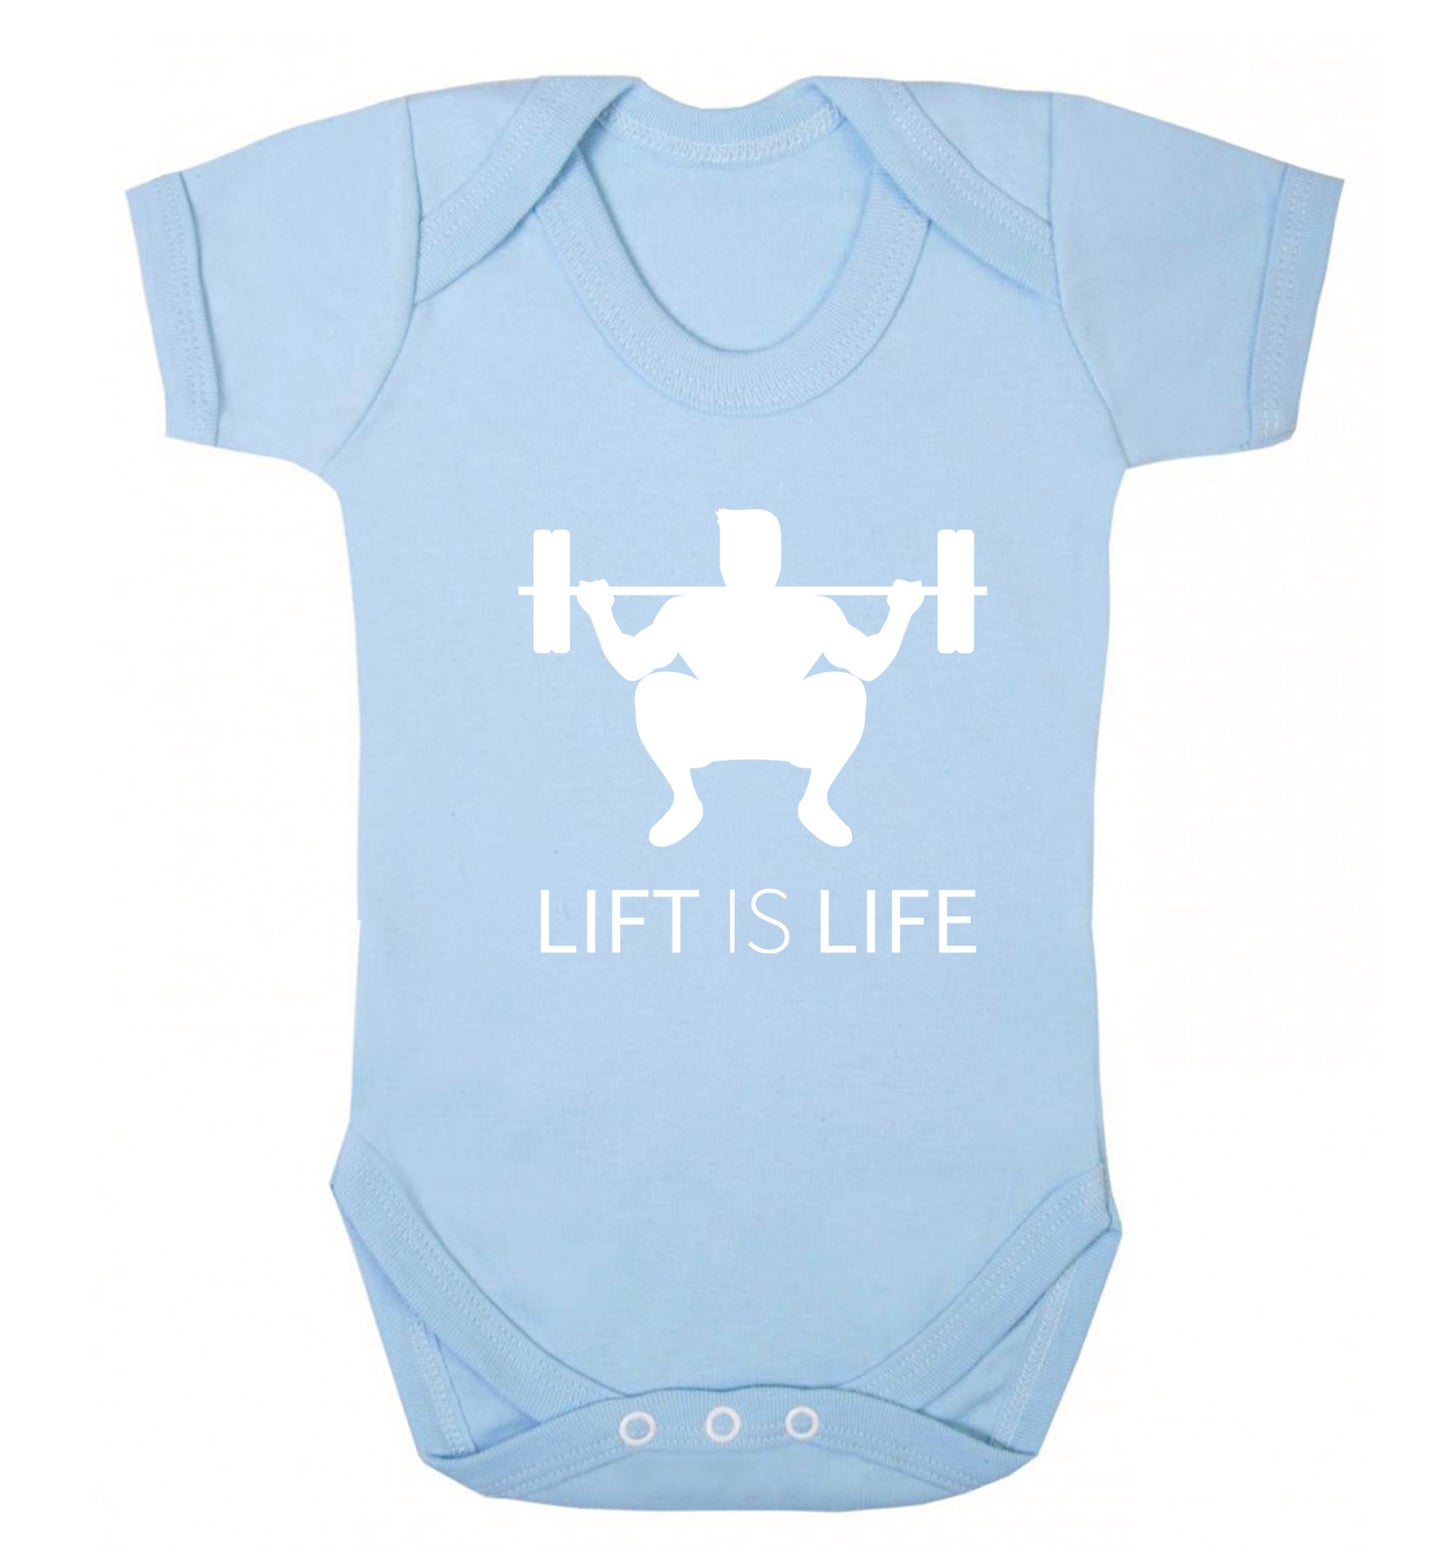 Lift is life Baby Vest pale blue 18-24 months